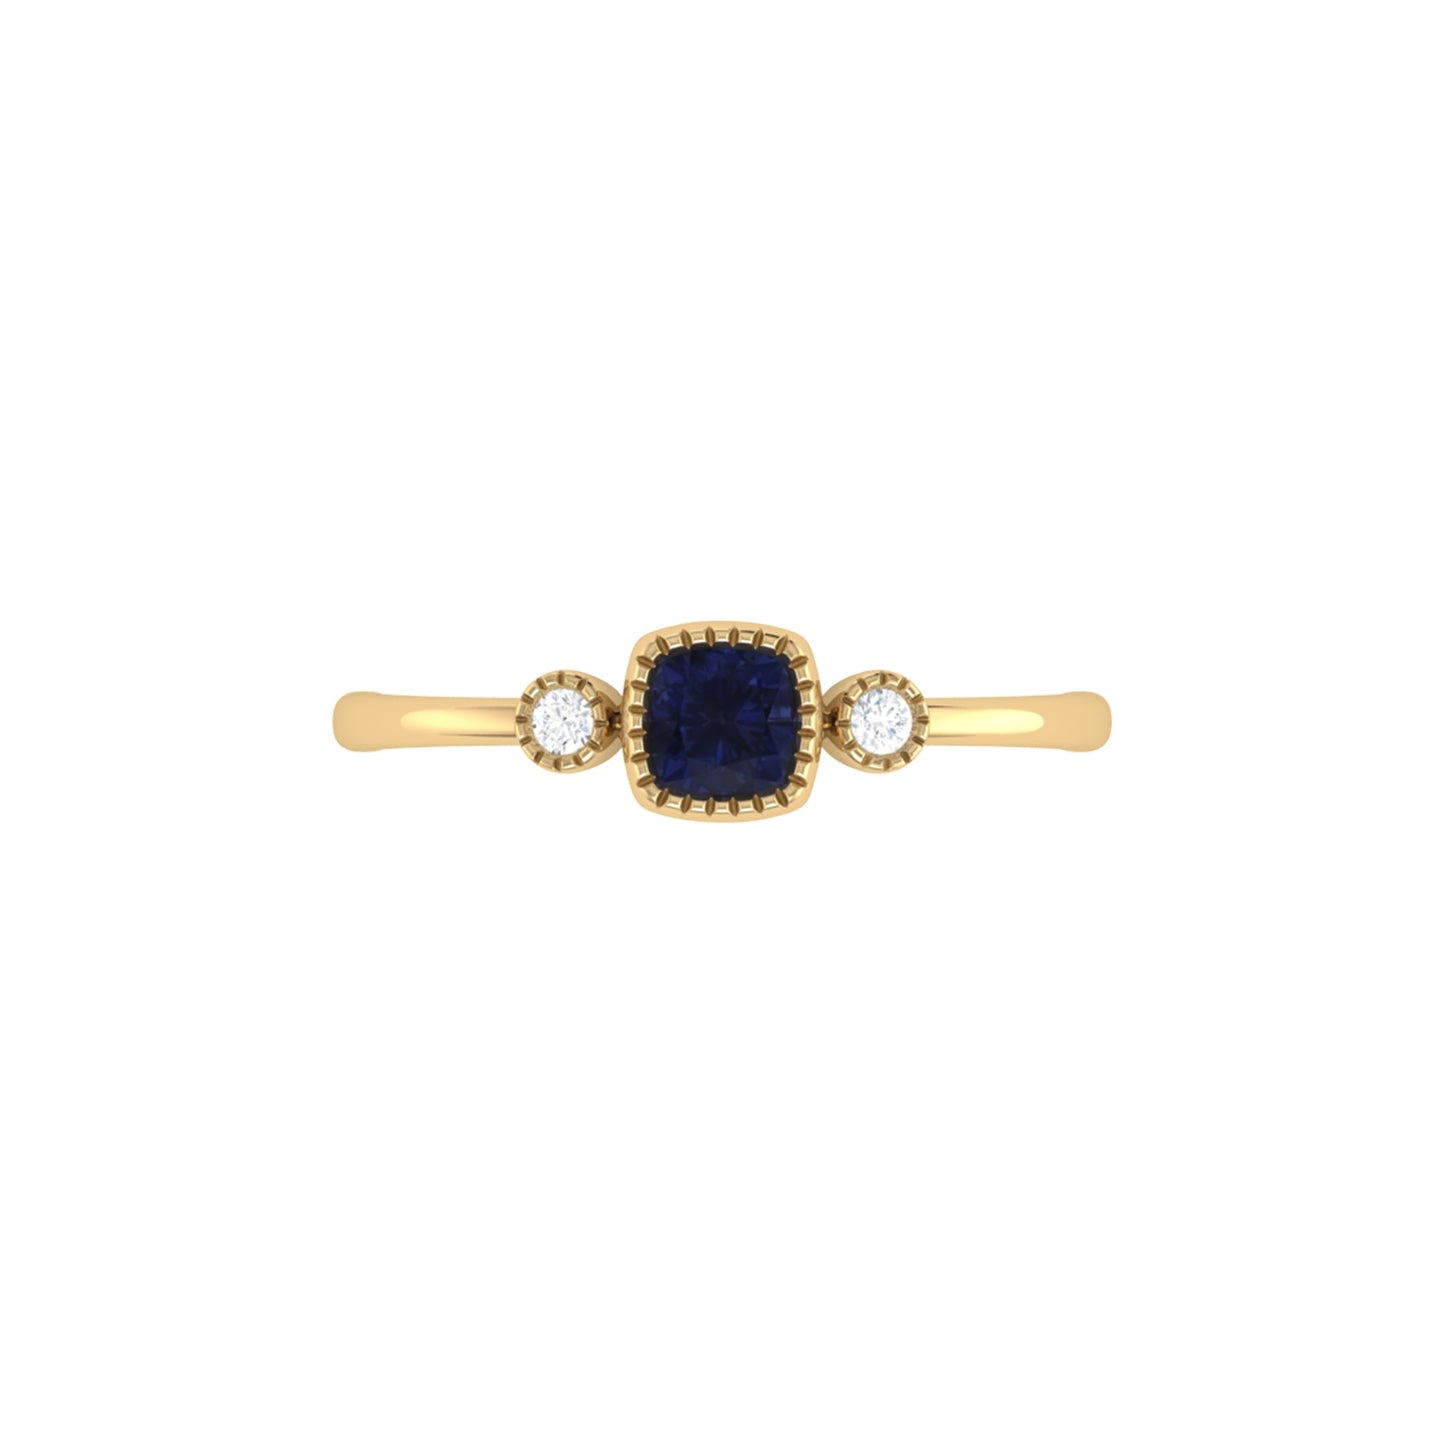 Cushion Cut Sapphire & Diamond Birthstone Ring In 14K Yellow Gold by LuvMyJewelry